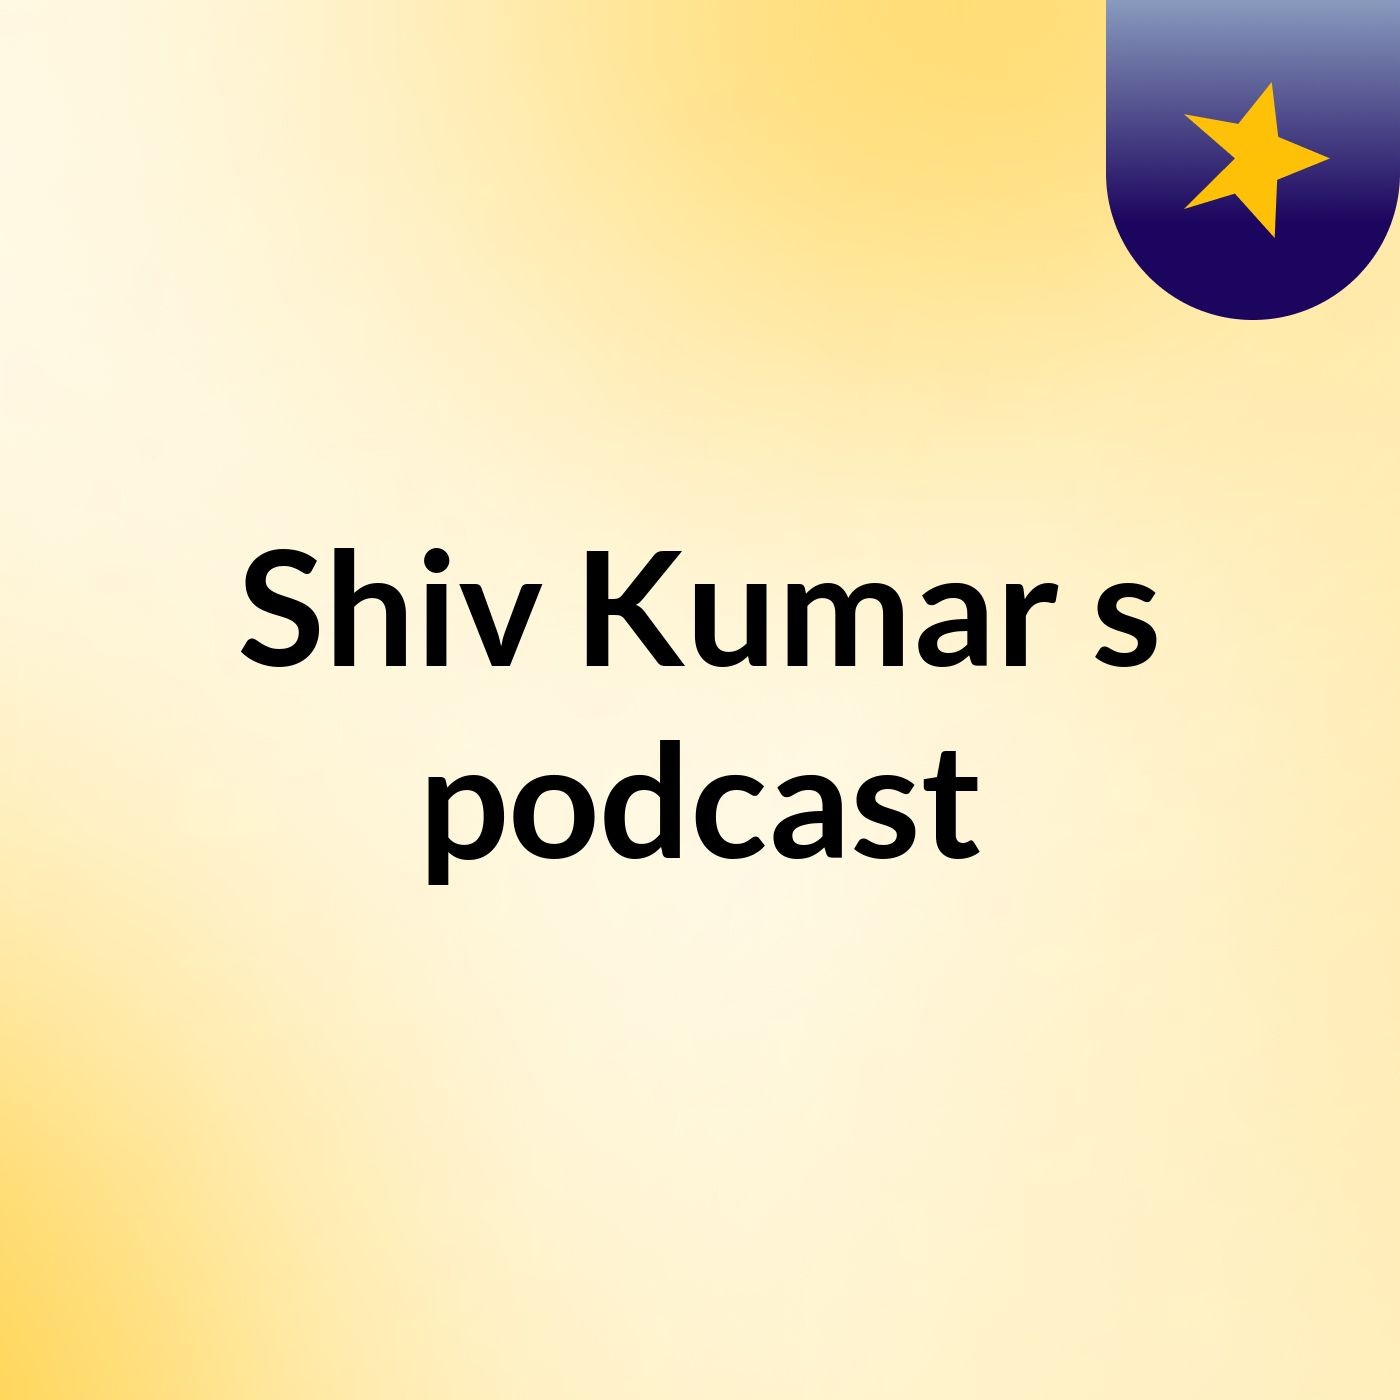 Episode 3 - Shiv Kumar's podcast